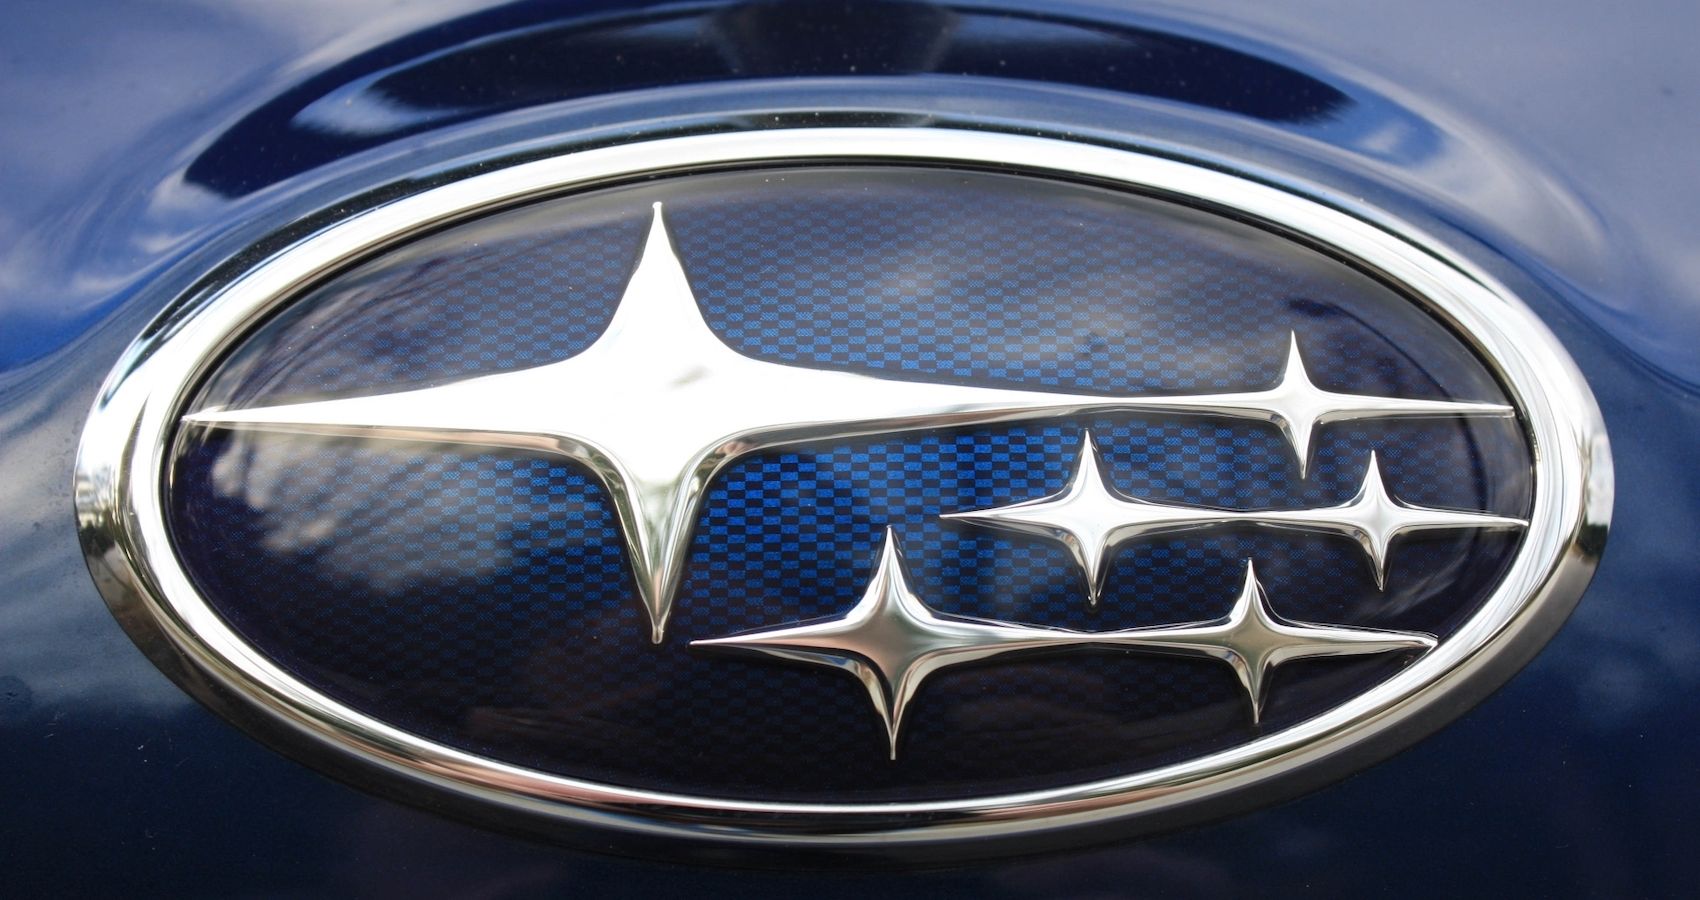 Subaru_logo